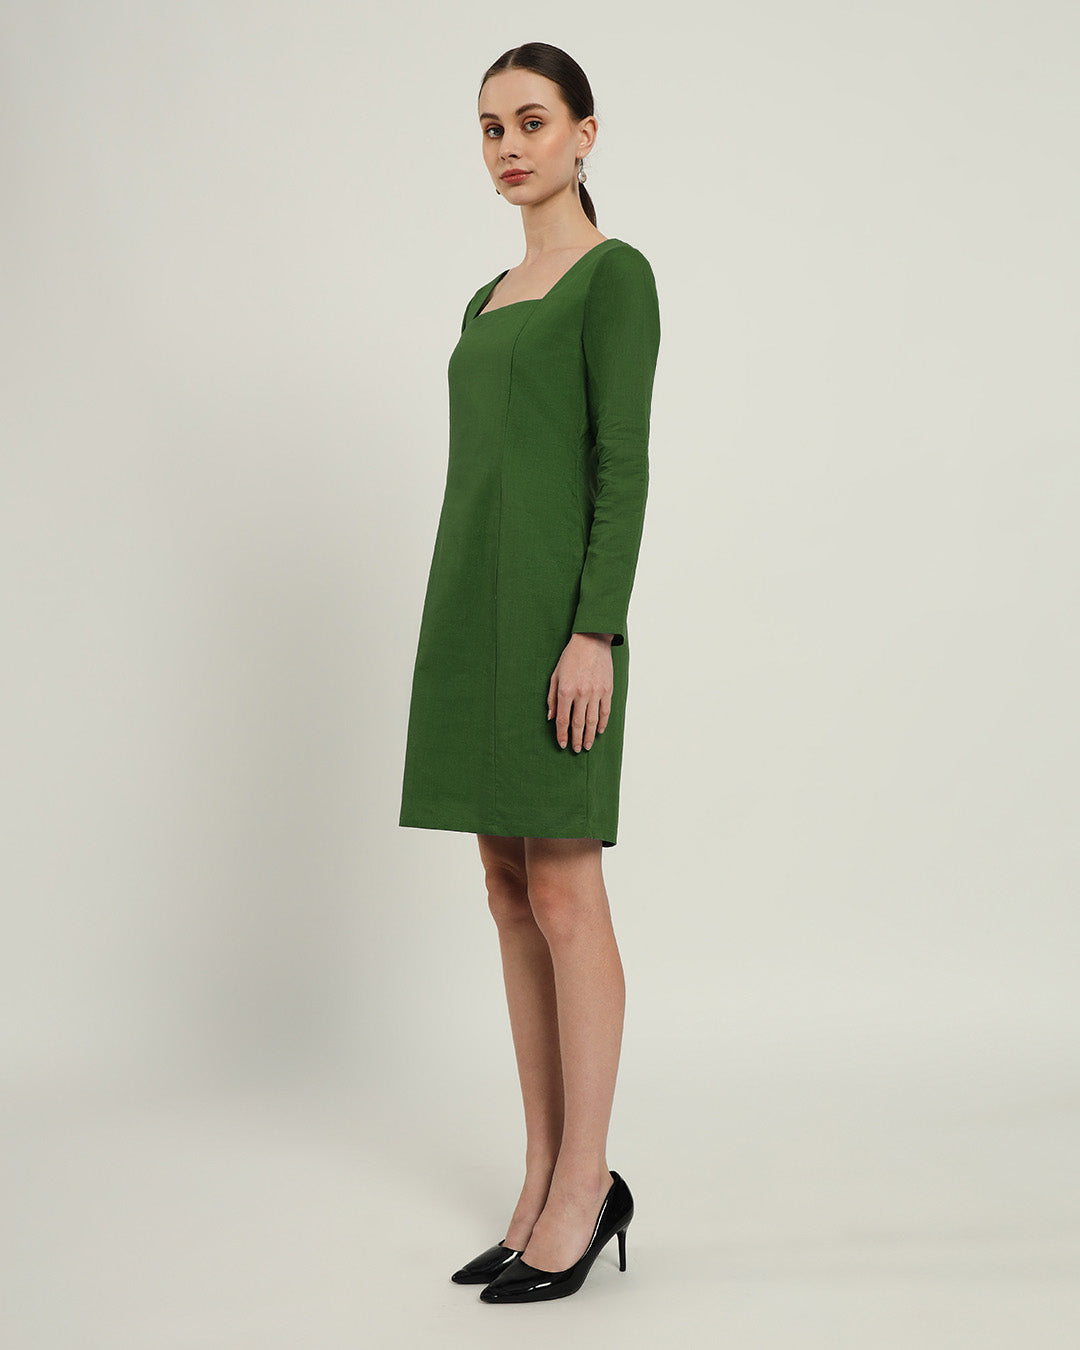 The Auburn Emerald Dress